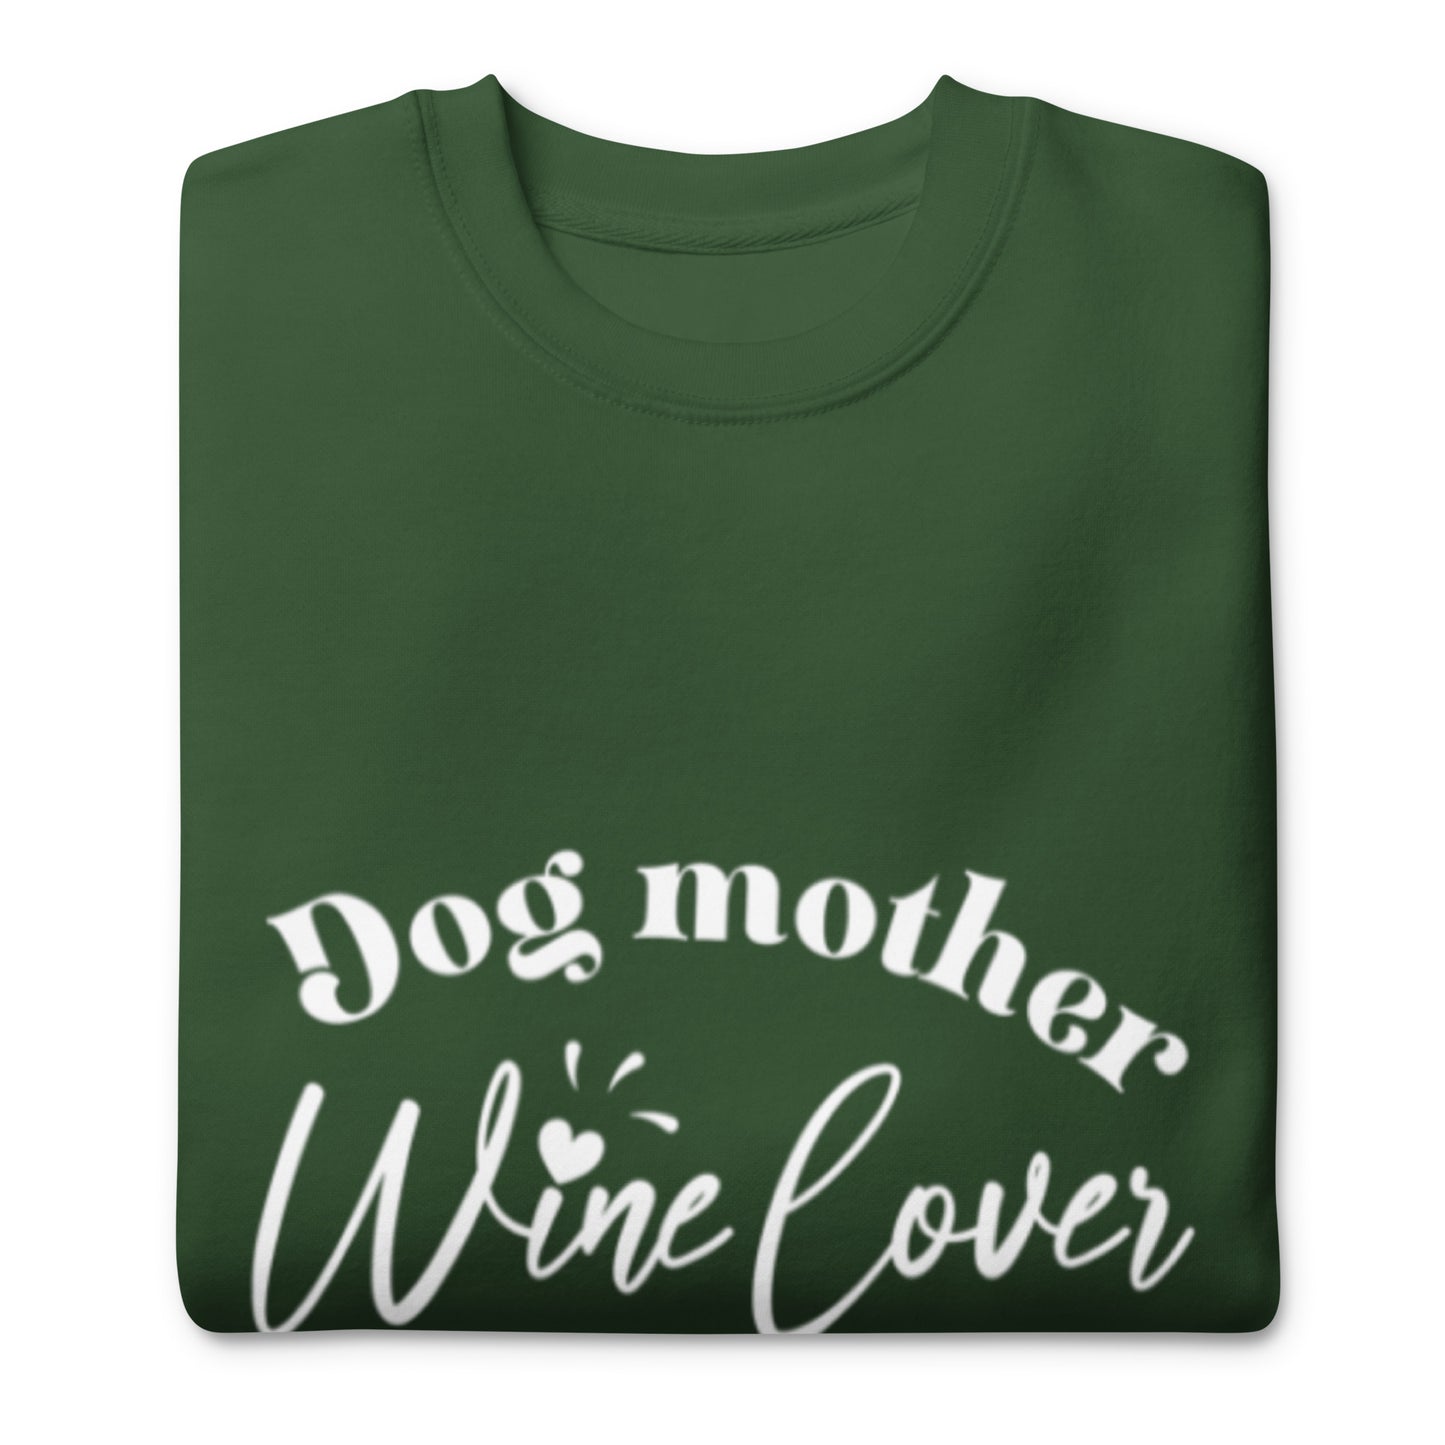 Dog Mother Wine Lover - Sweatshirt